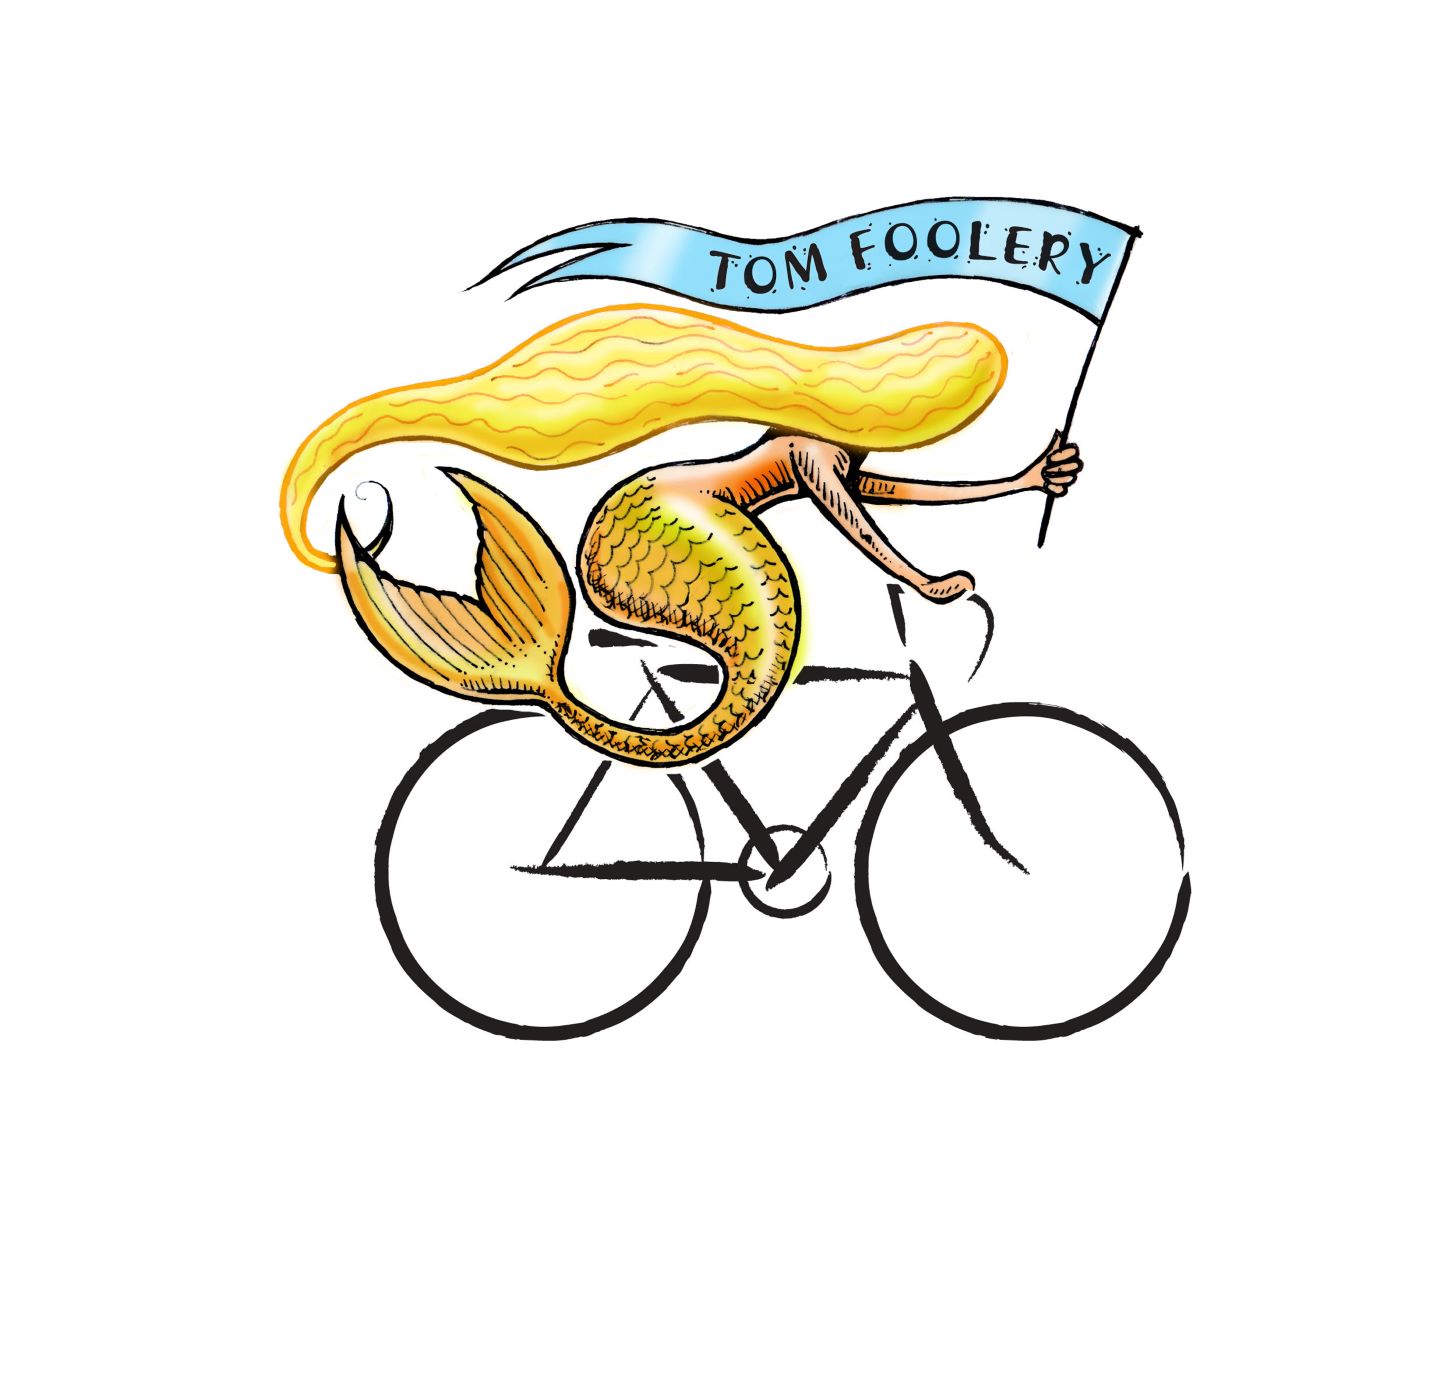 Tom Foolery Coffee Company logo